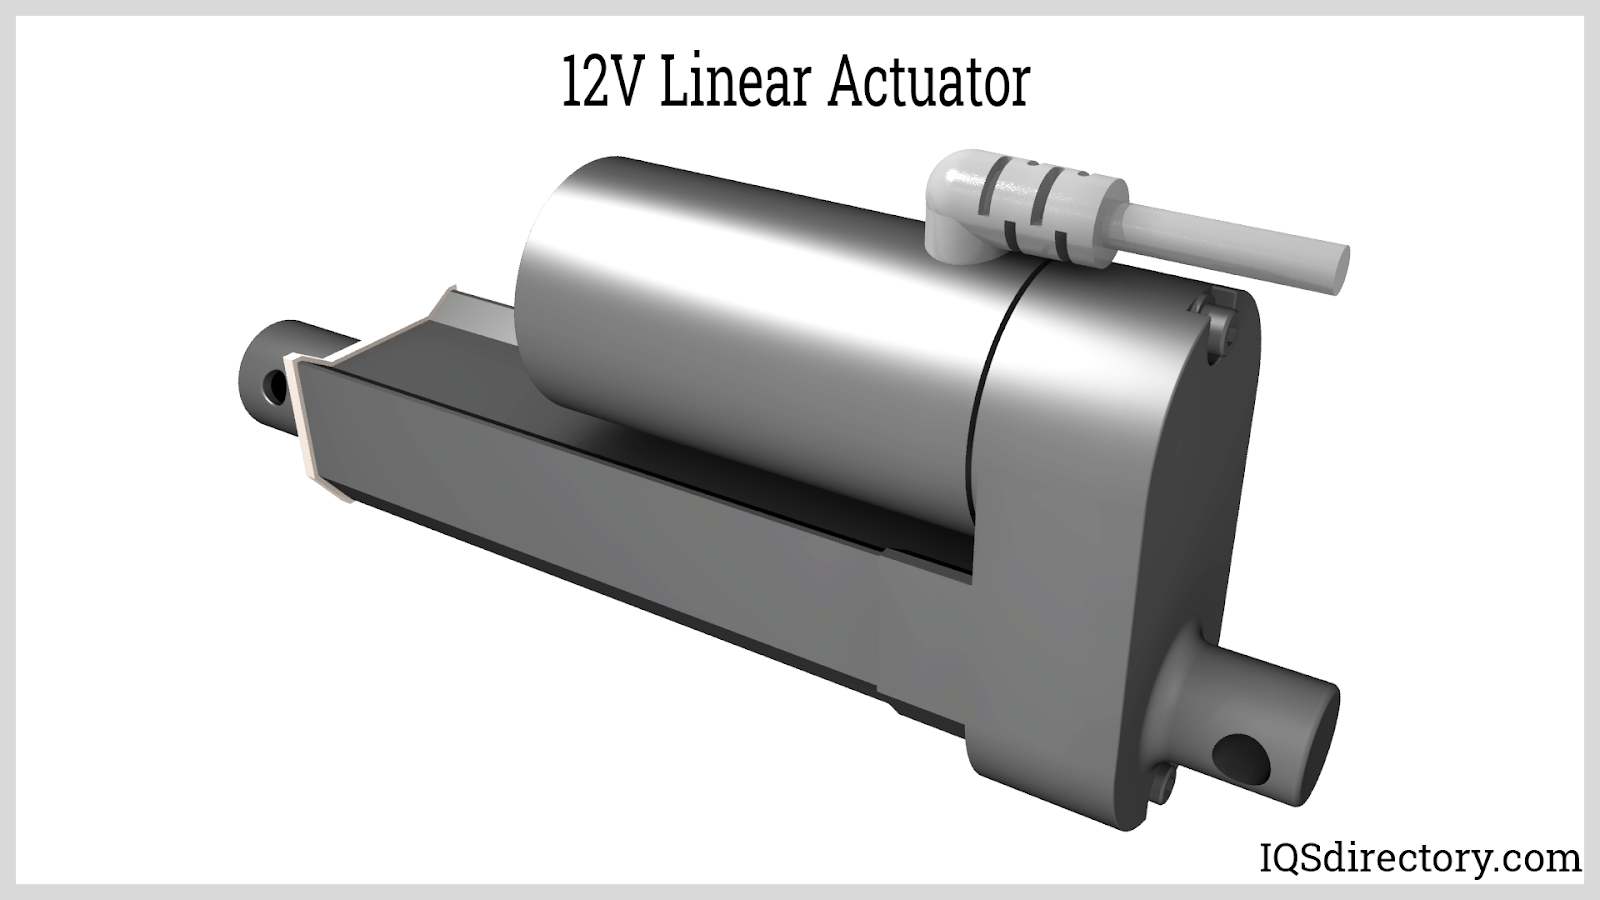 12V Linear Actuator